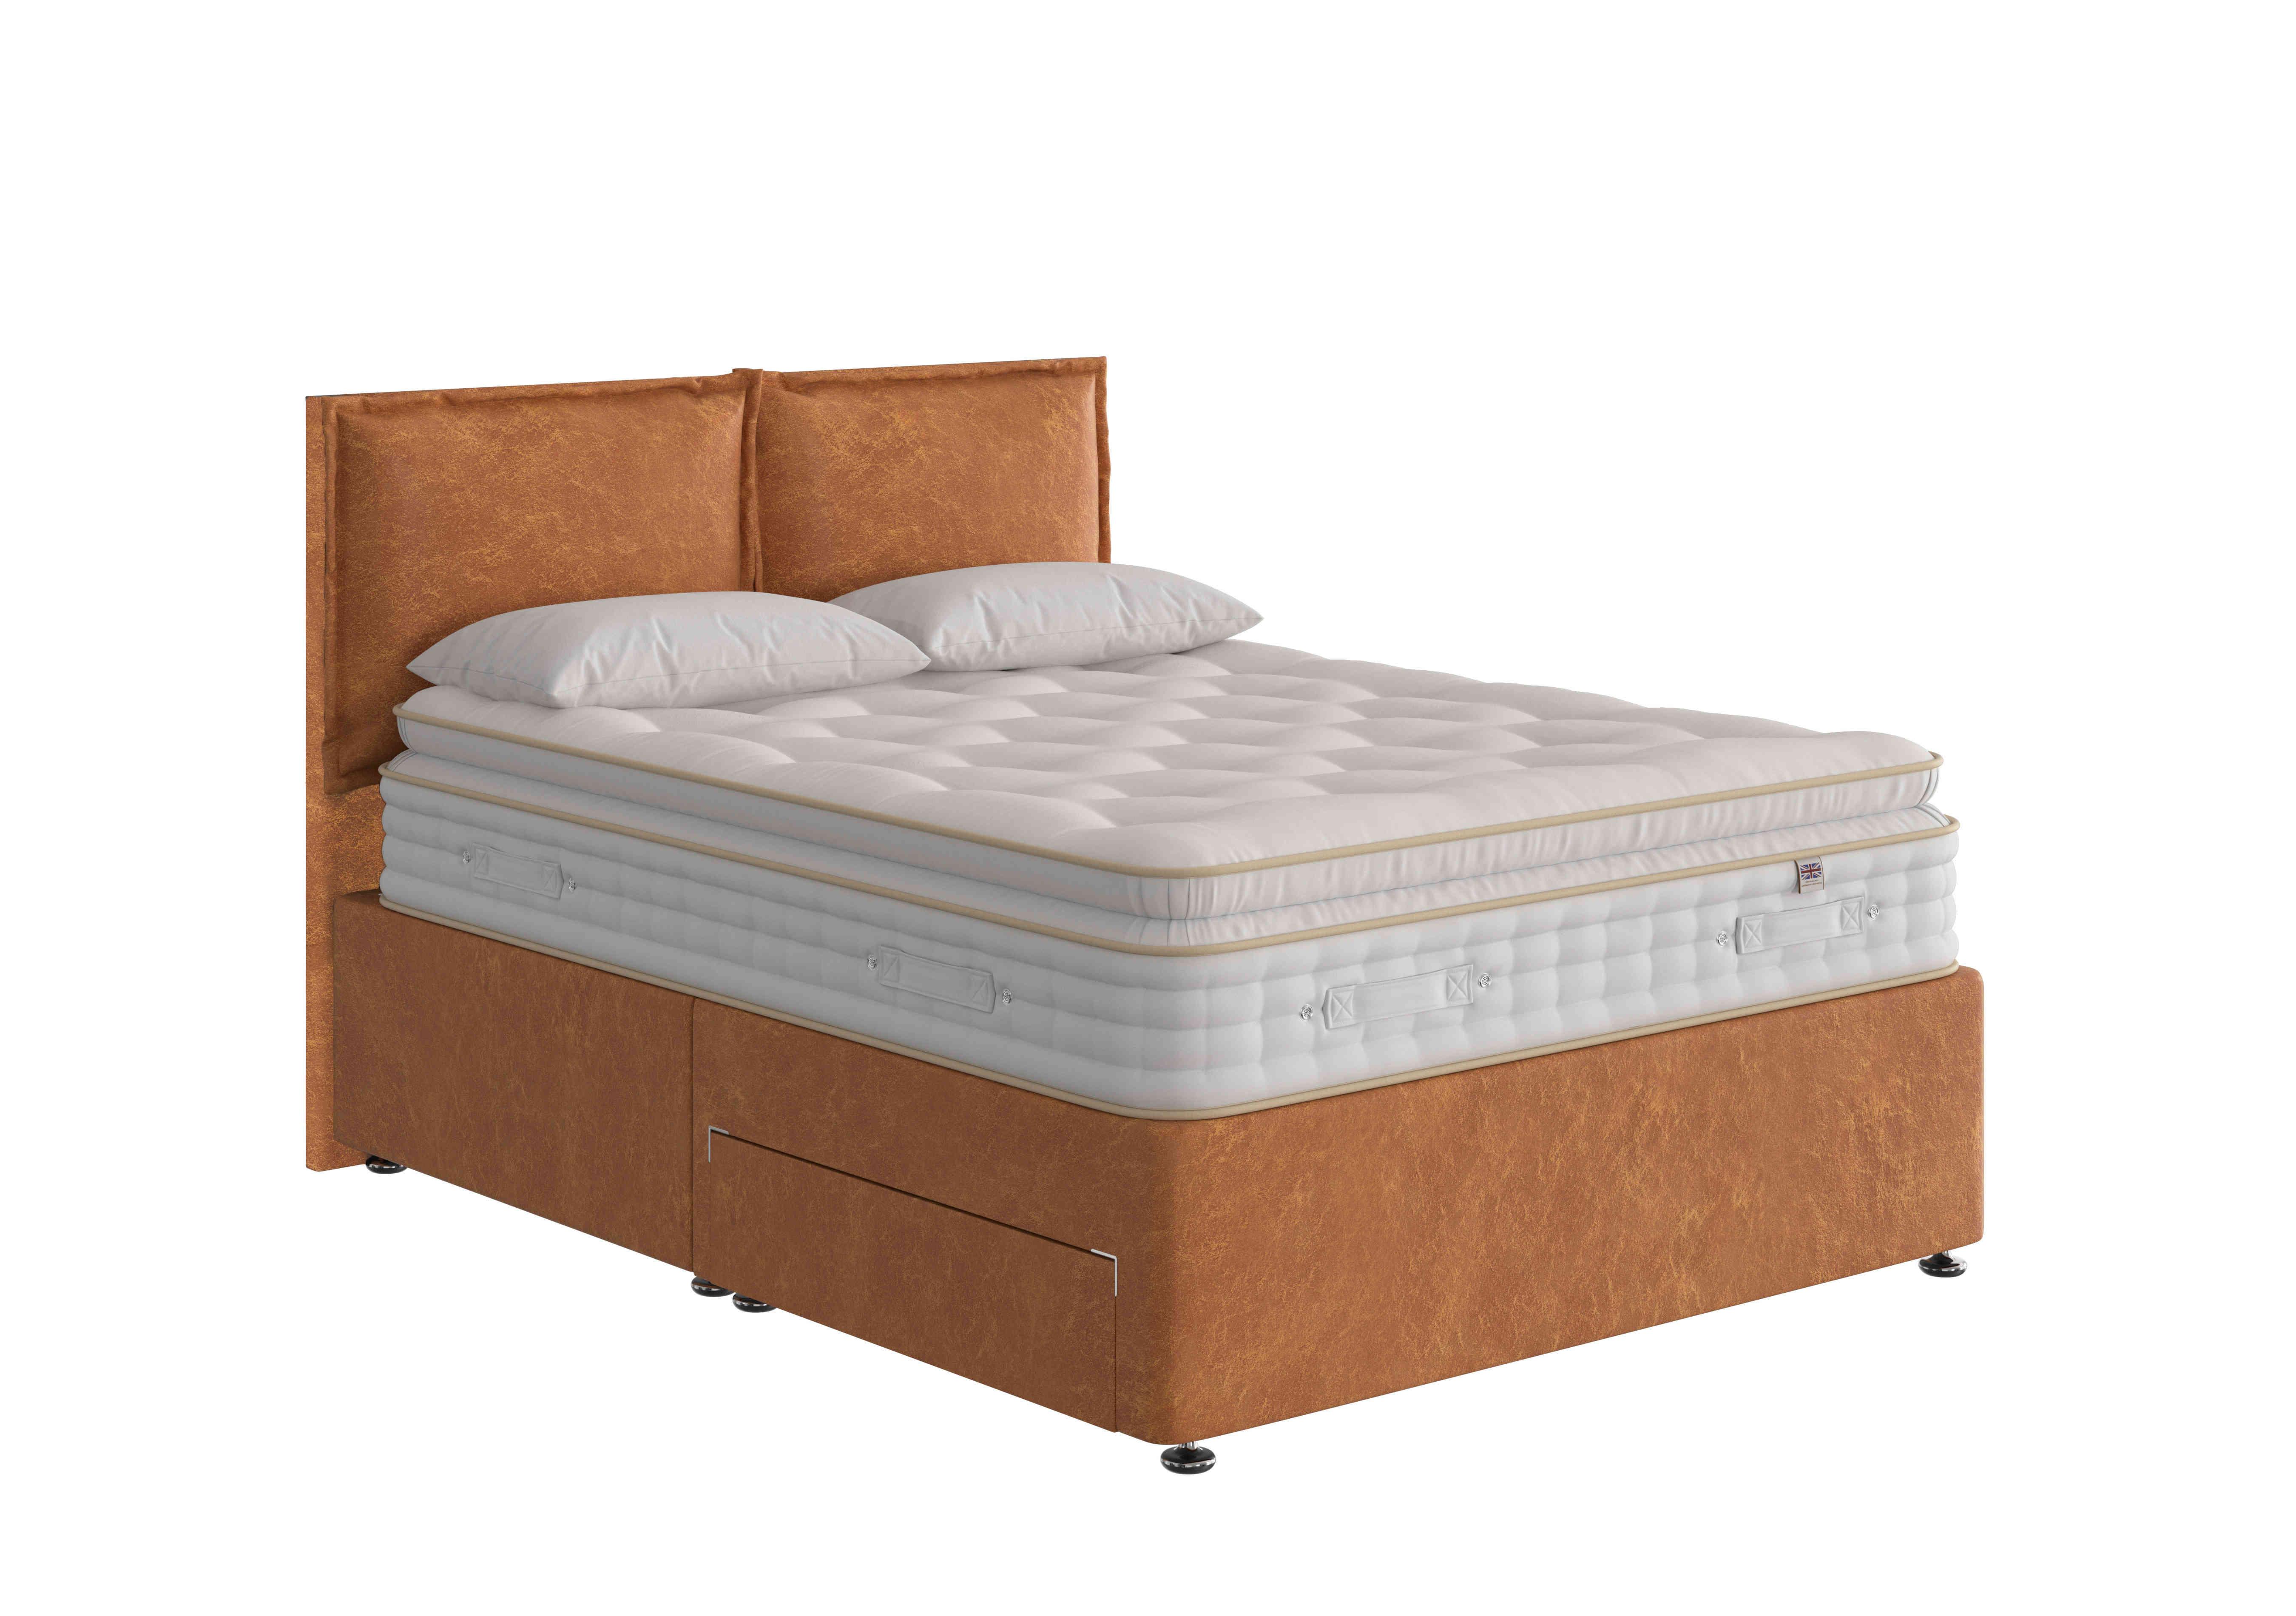 Boutique 3000 Pillow Top Divan Set in Rhodeo Rust on Furniture Village